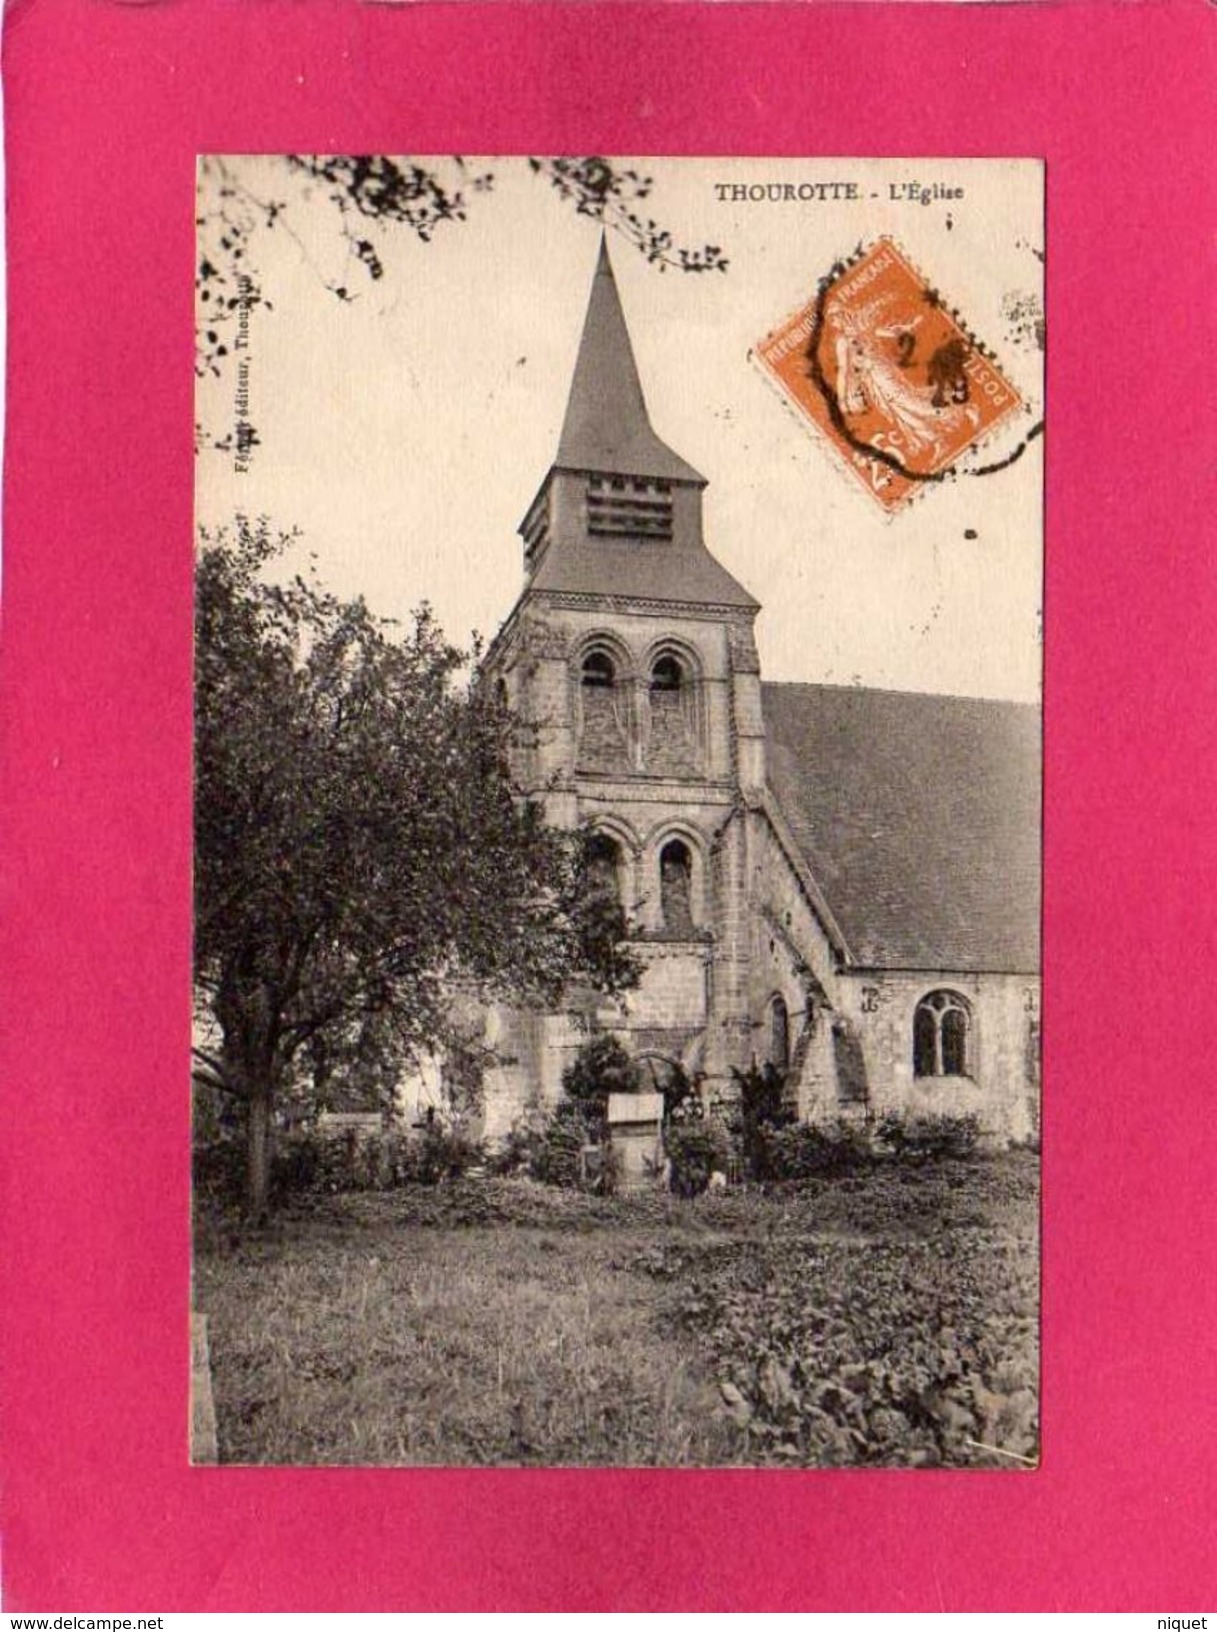 60 Oise, Thourotte, L'Eglise, 1929 - Thourotte